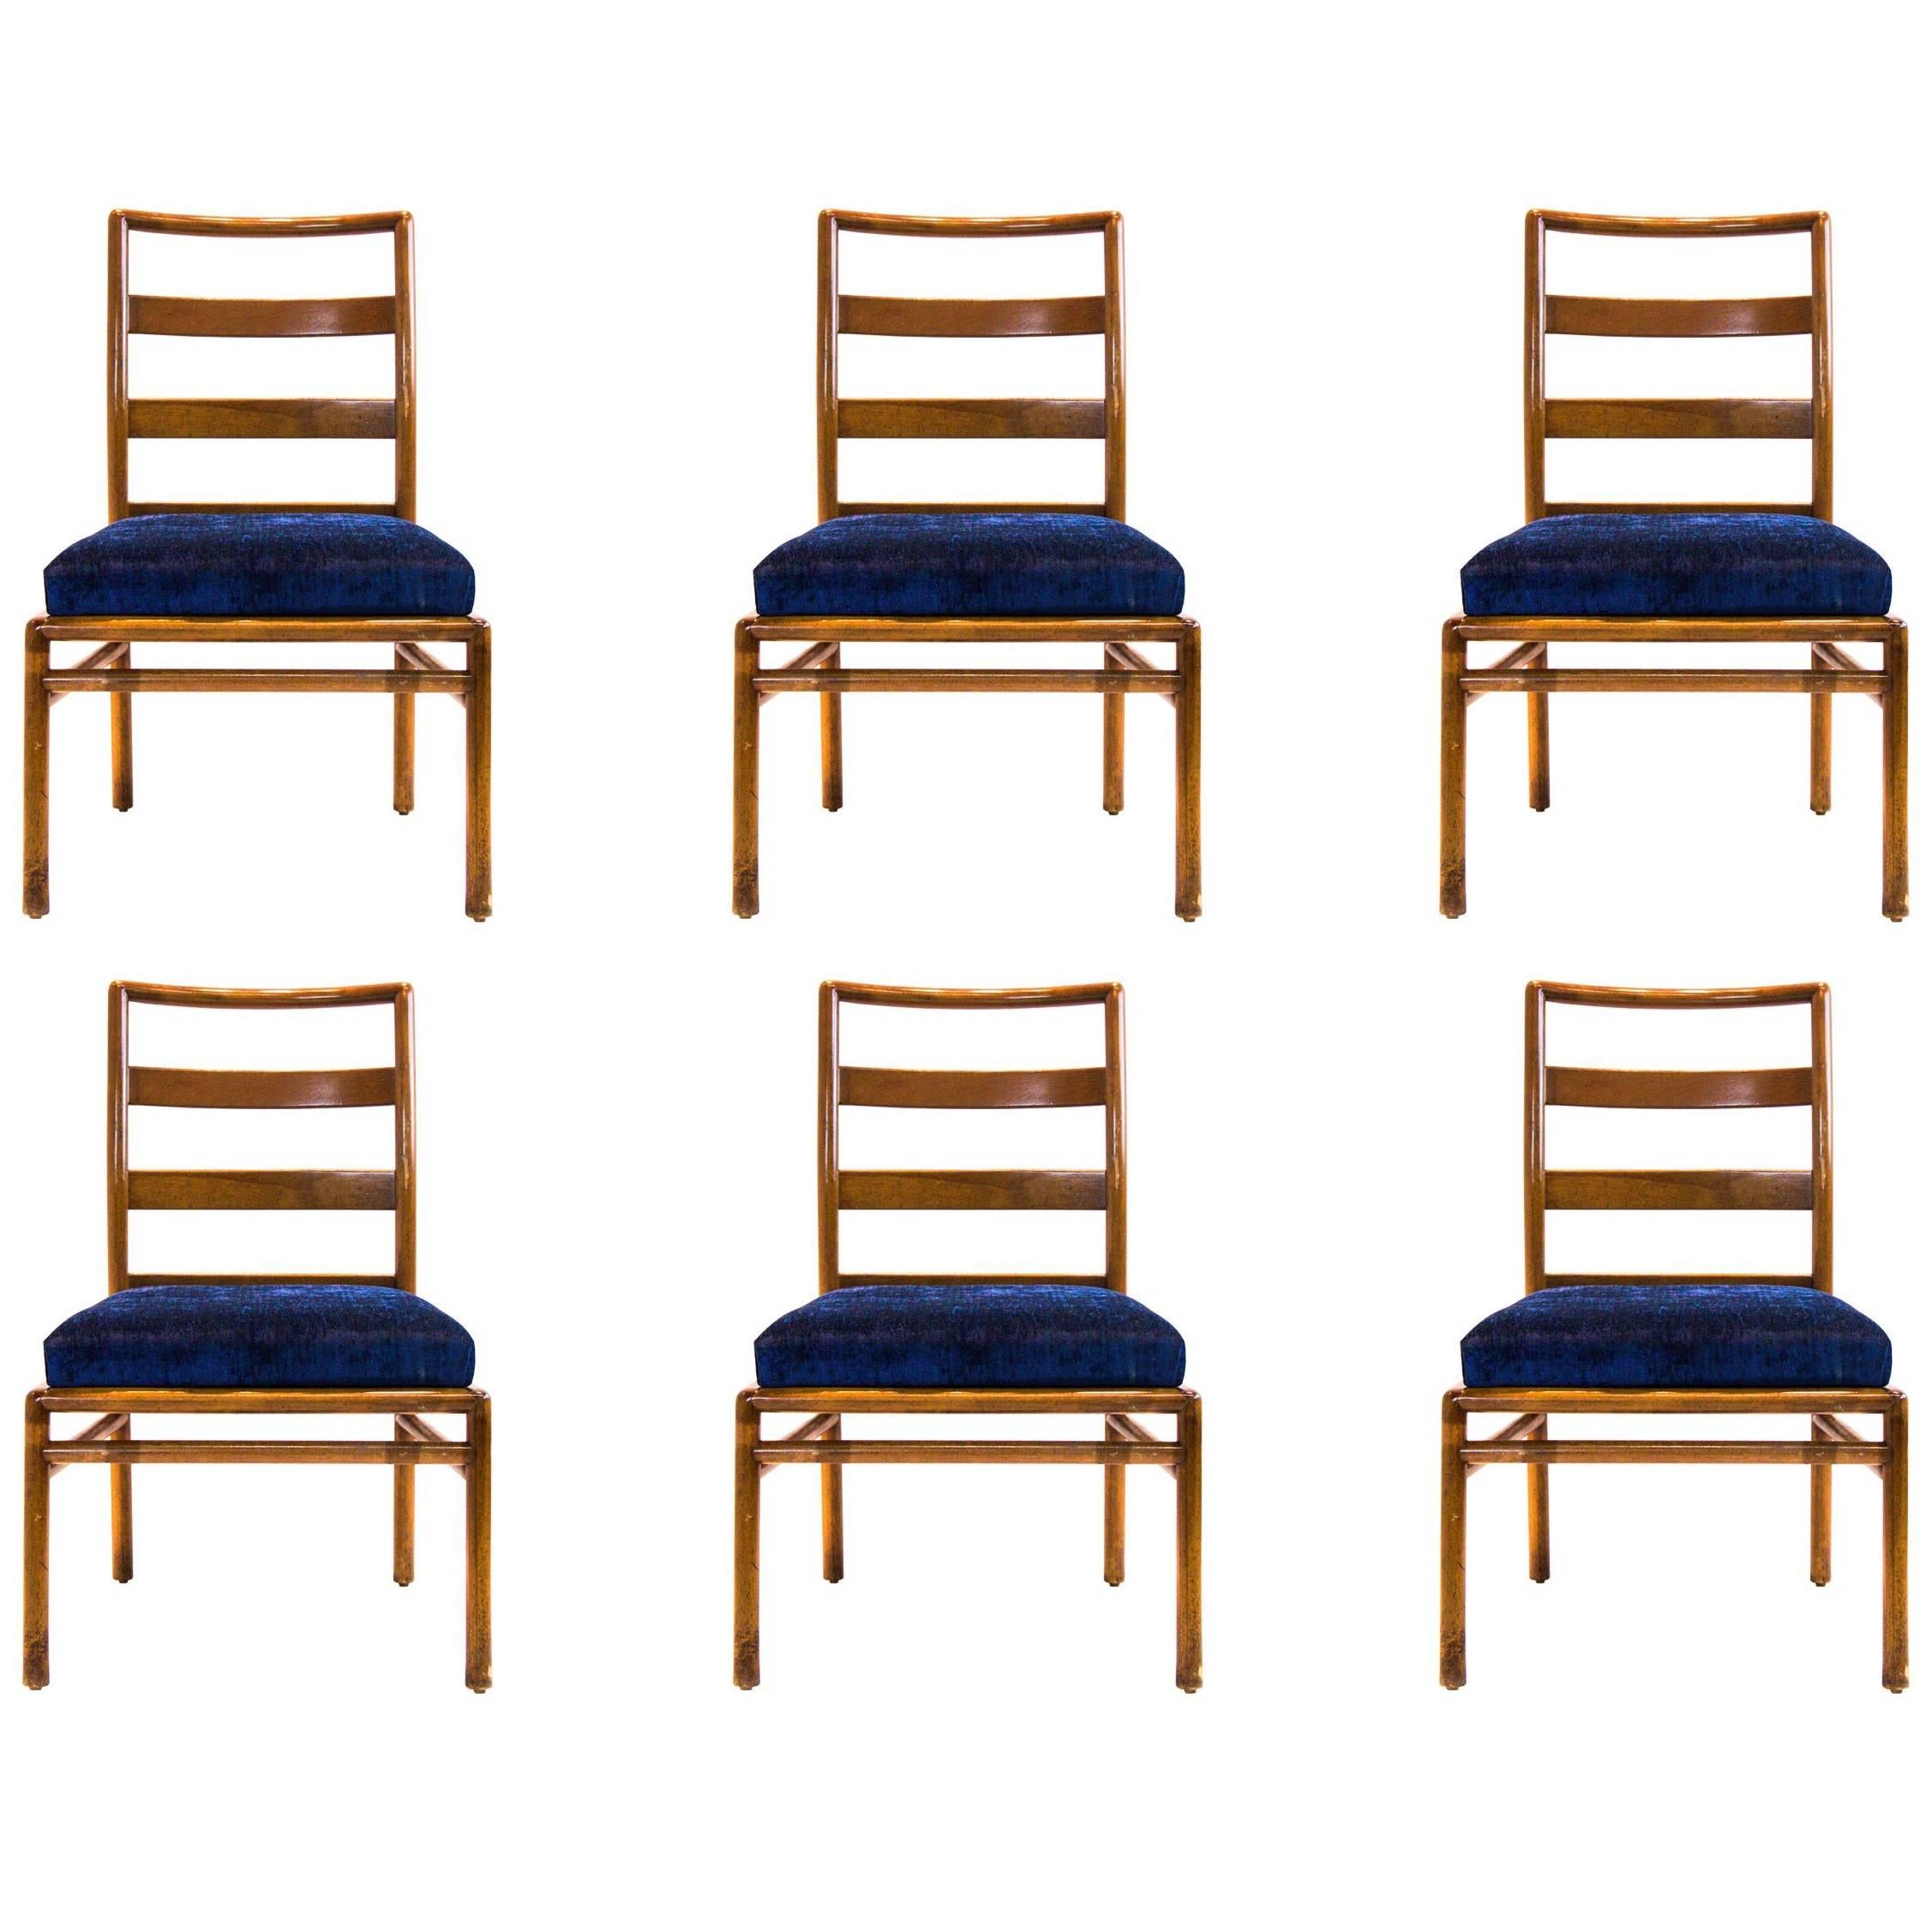 Set of Six Ladder Back Dining Chairs by Robsjohn-Gibbings